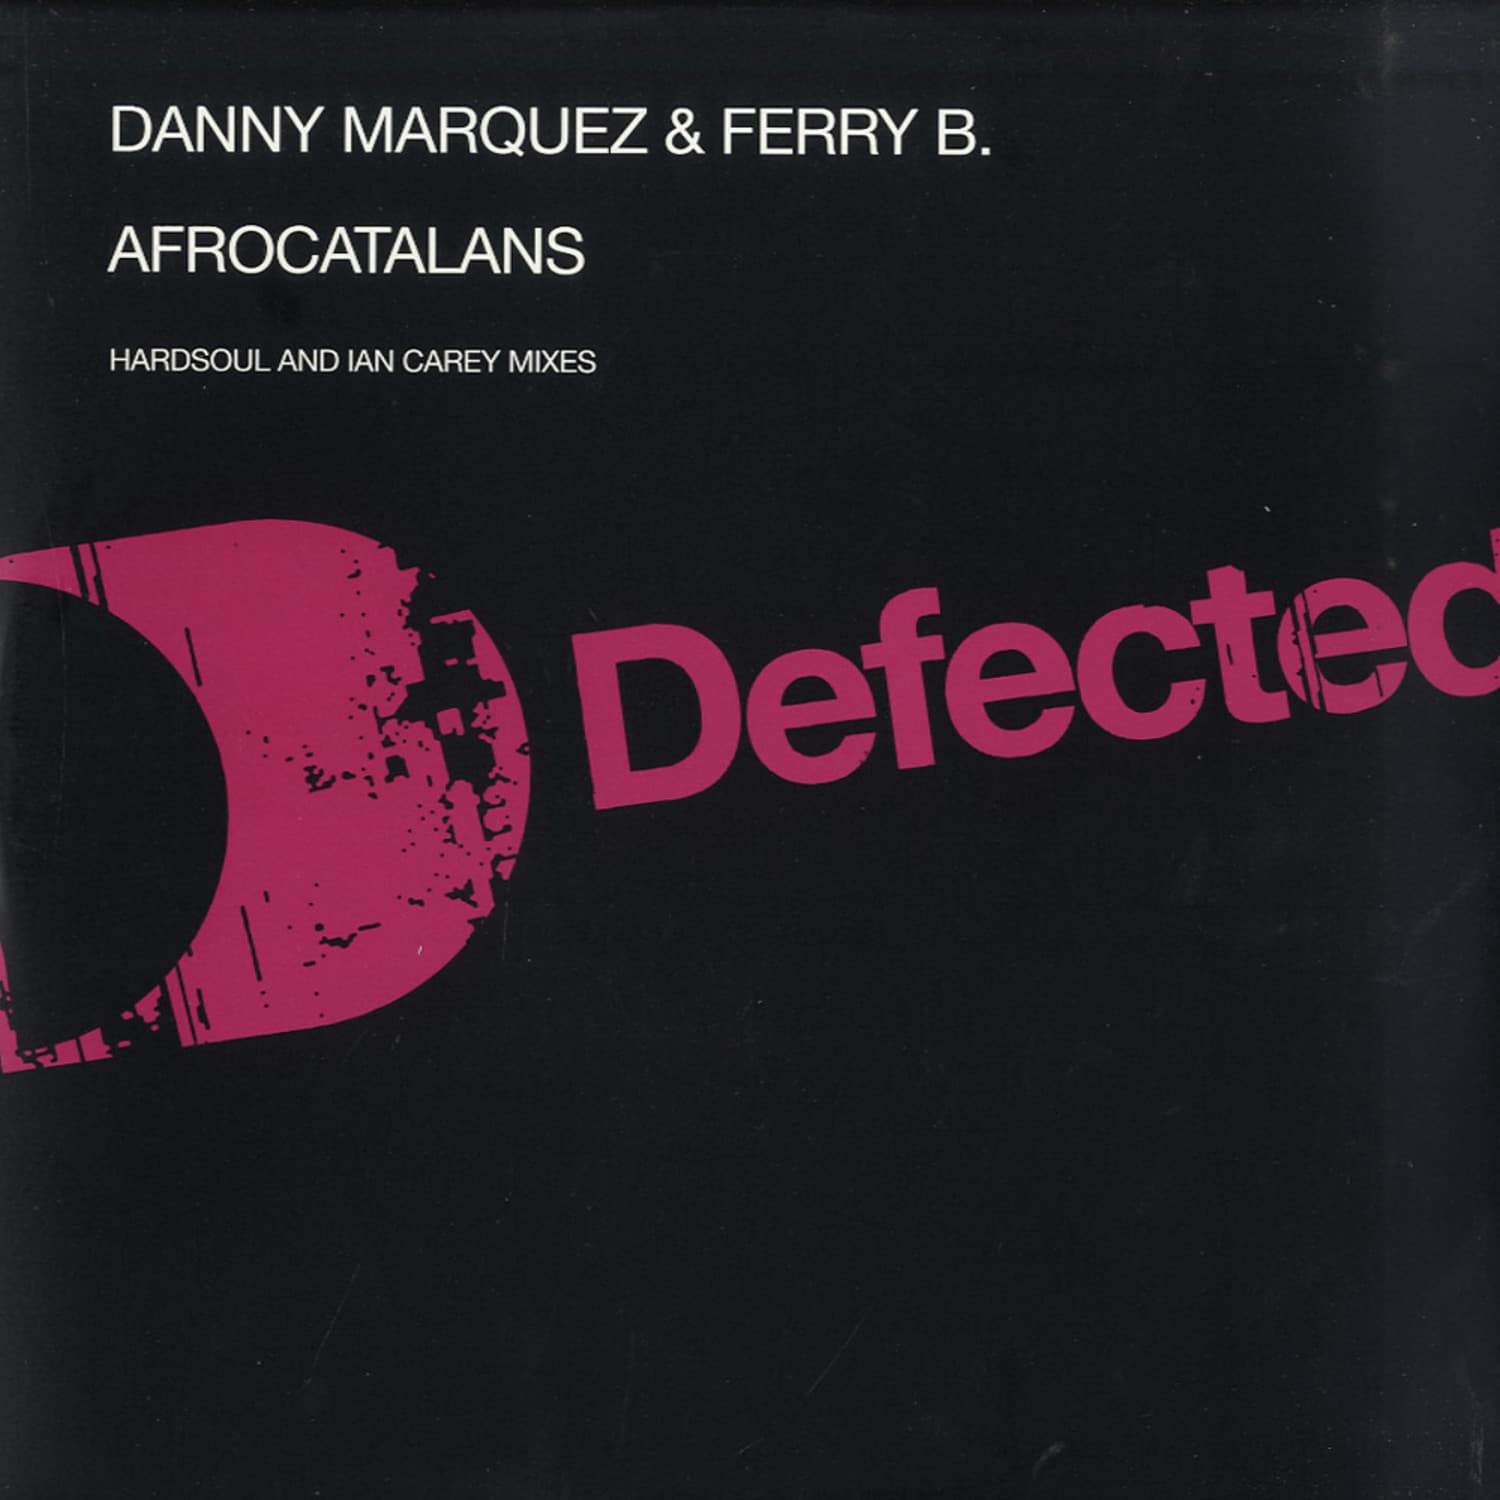 Danny Marquez & Ferry B. - AFRO CATALANS